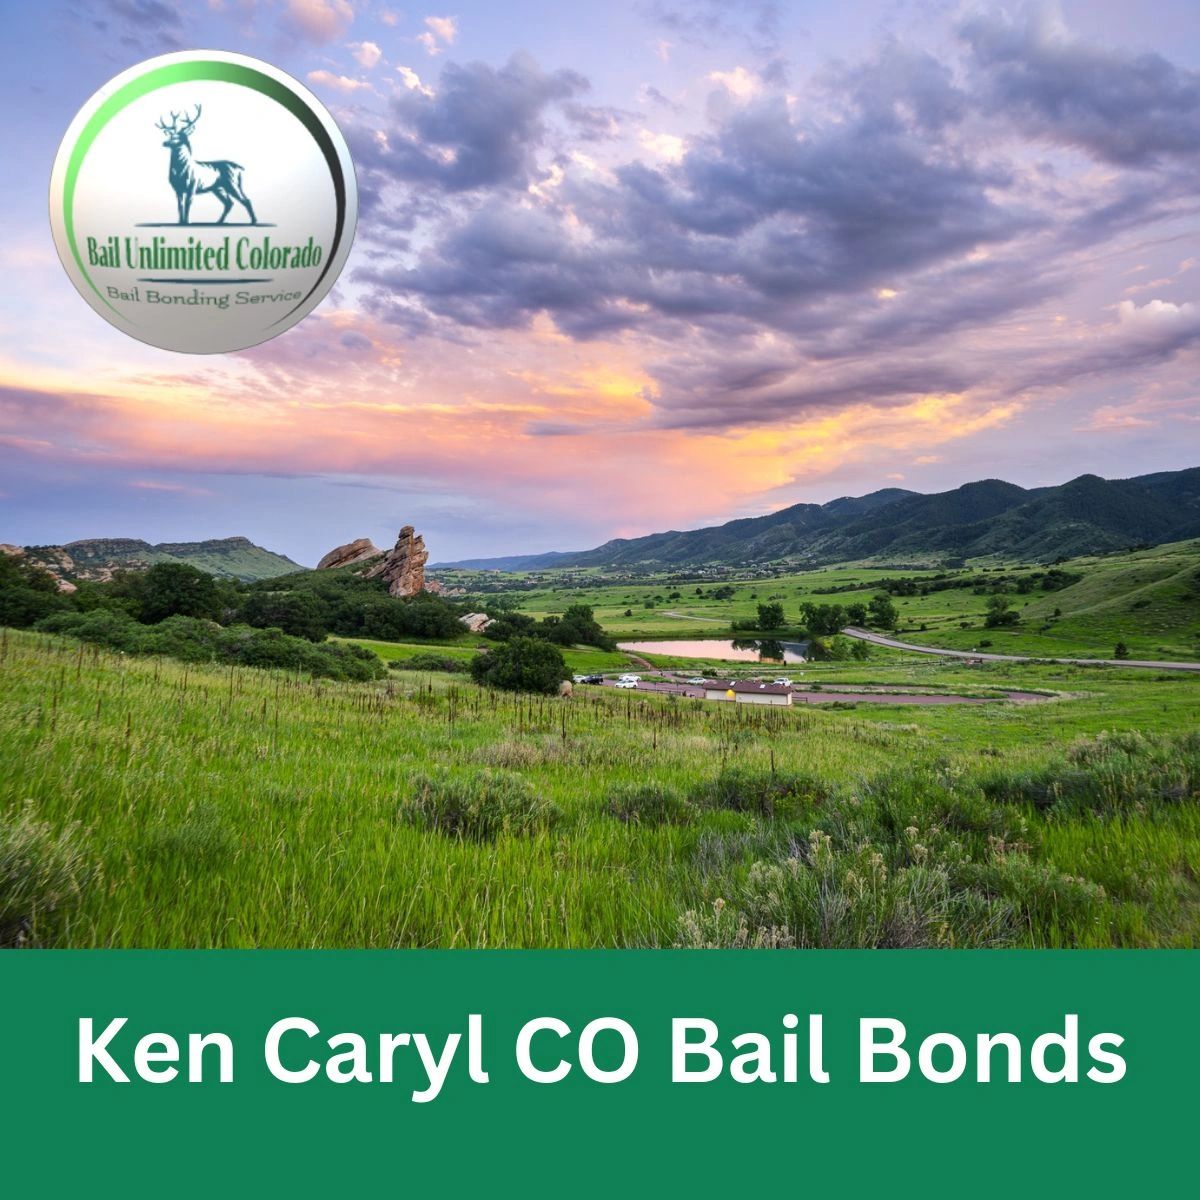 Ken Caryl CO Bail Bonds Ken Caryl Mountain View LOGO Bail Unlimited Colorado Bail Bonding Service